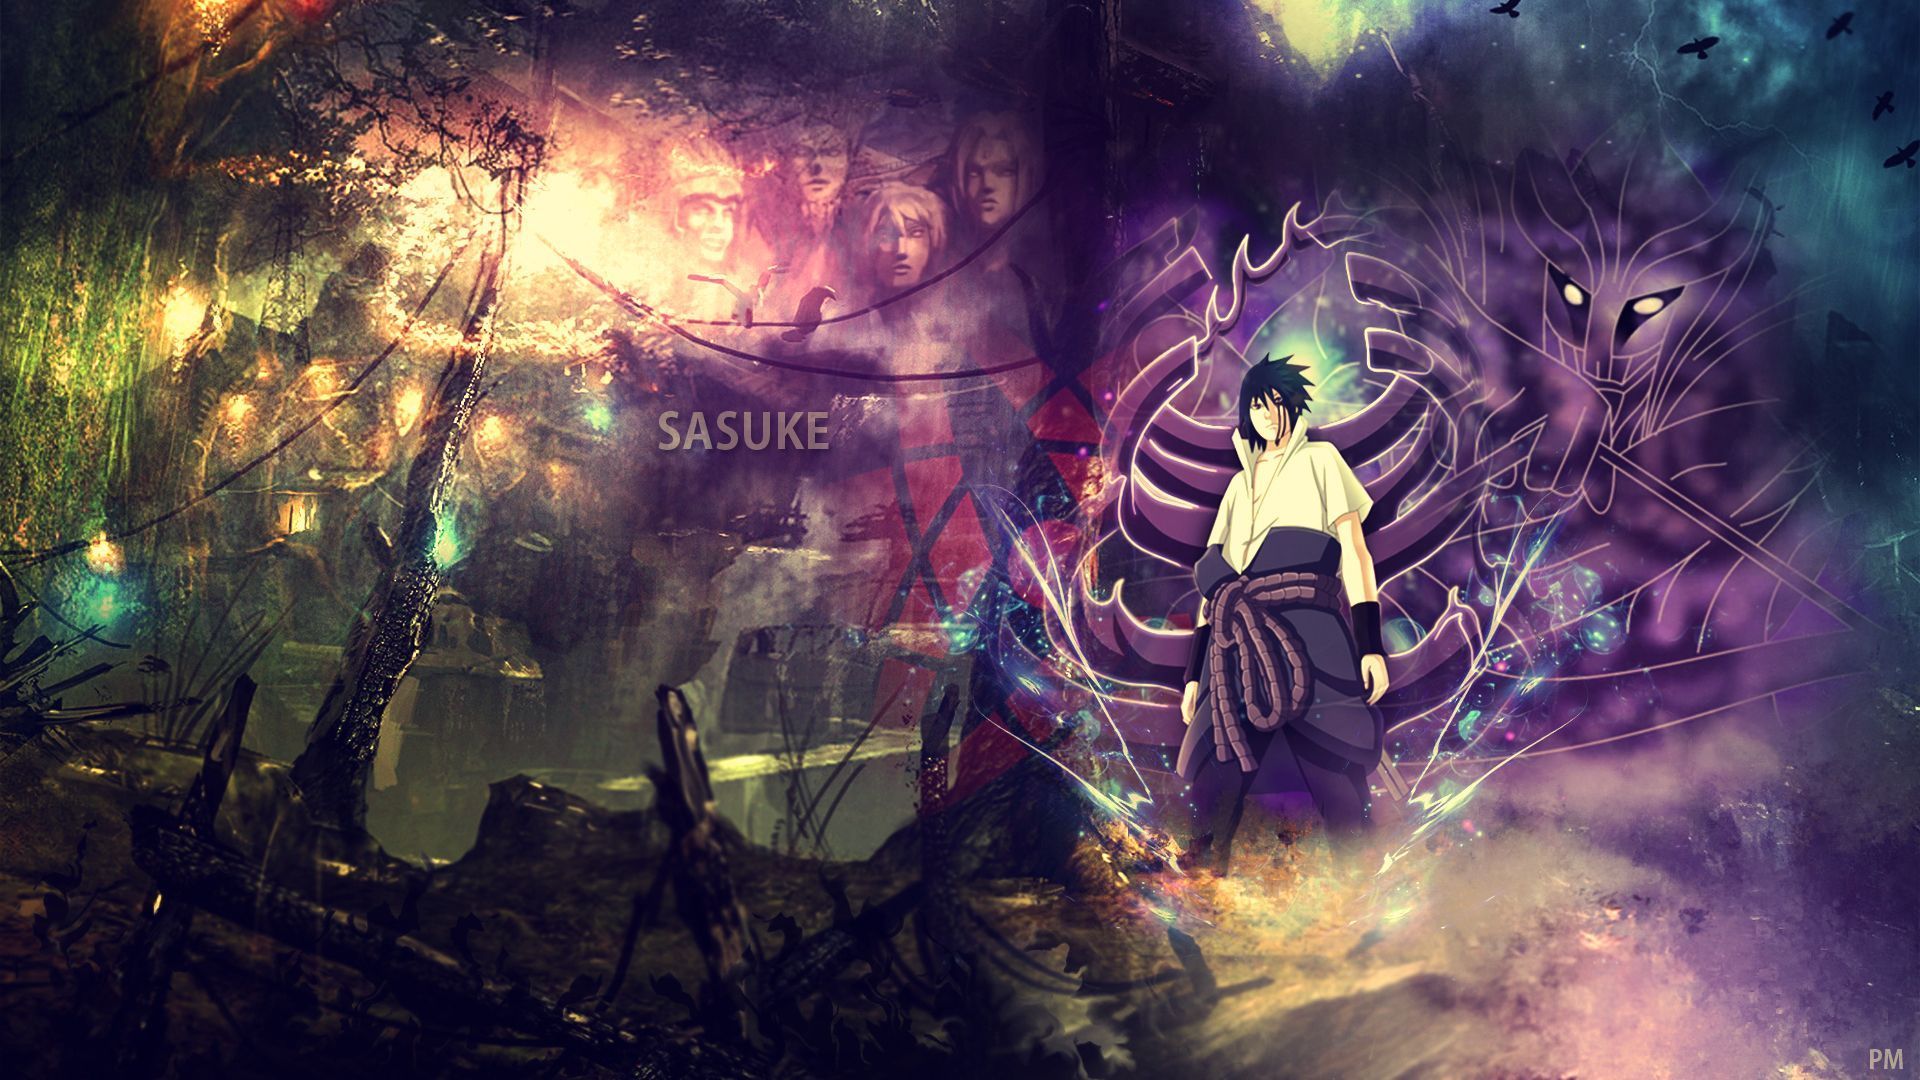 Wallpaper] - Sasuke Uchiha by attats on DeviantArt